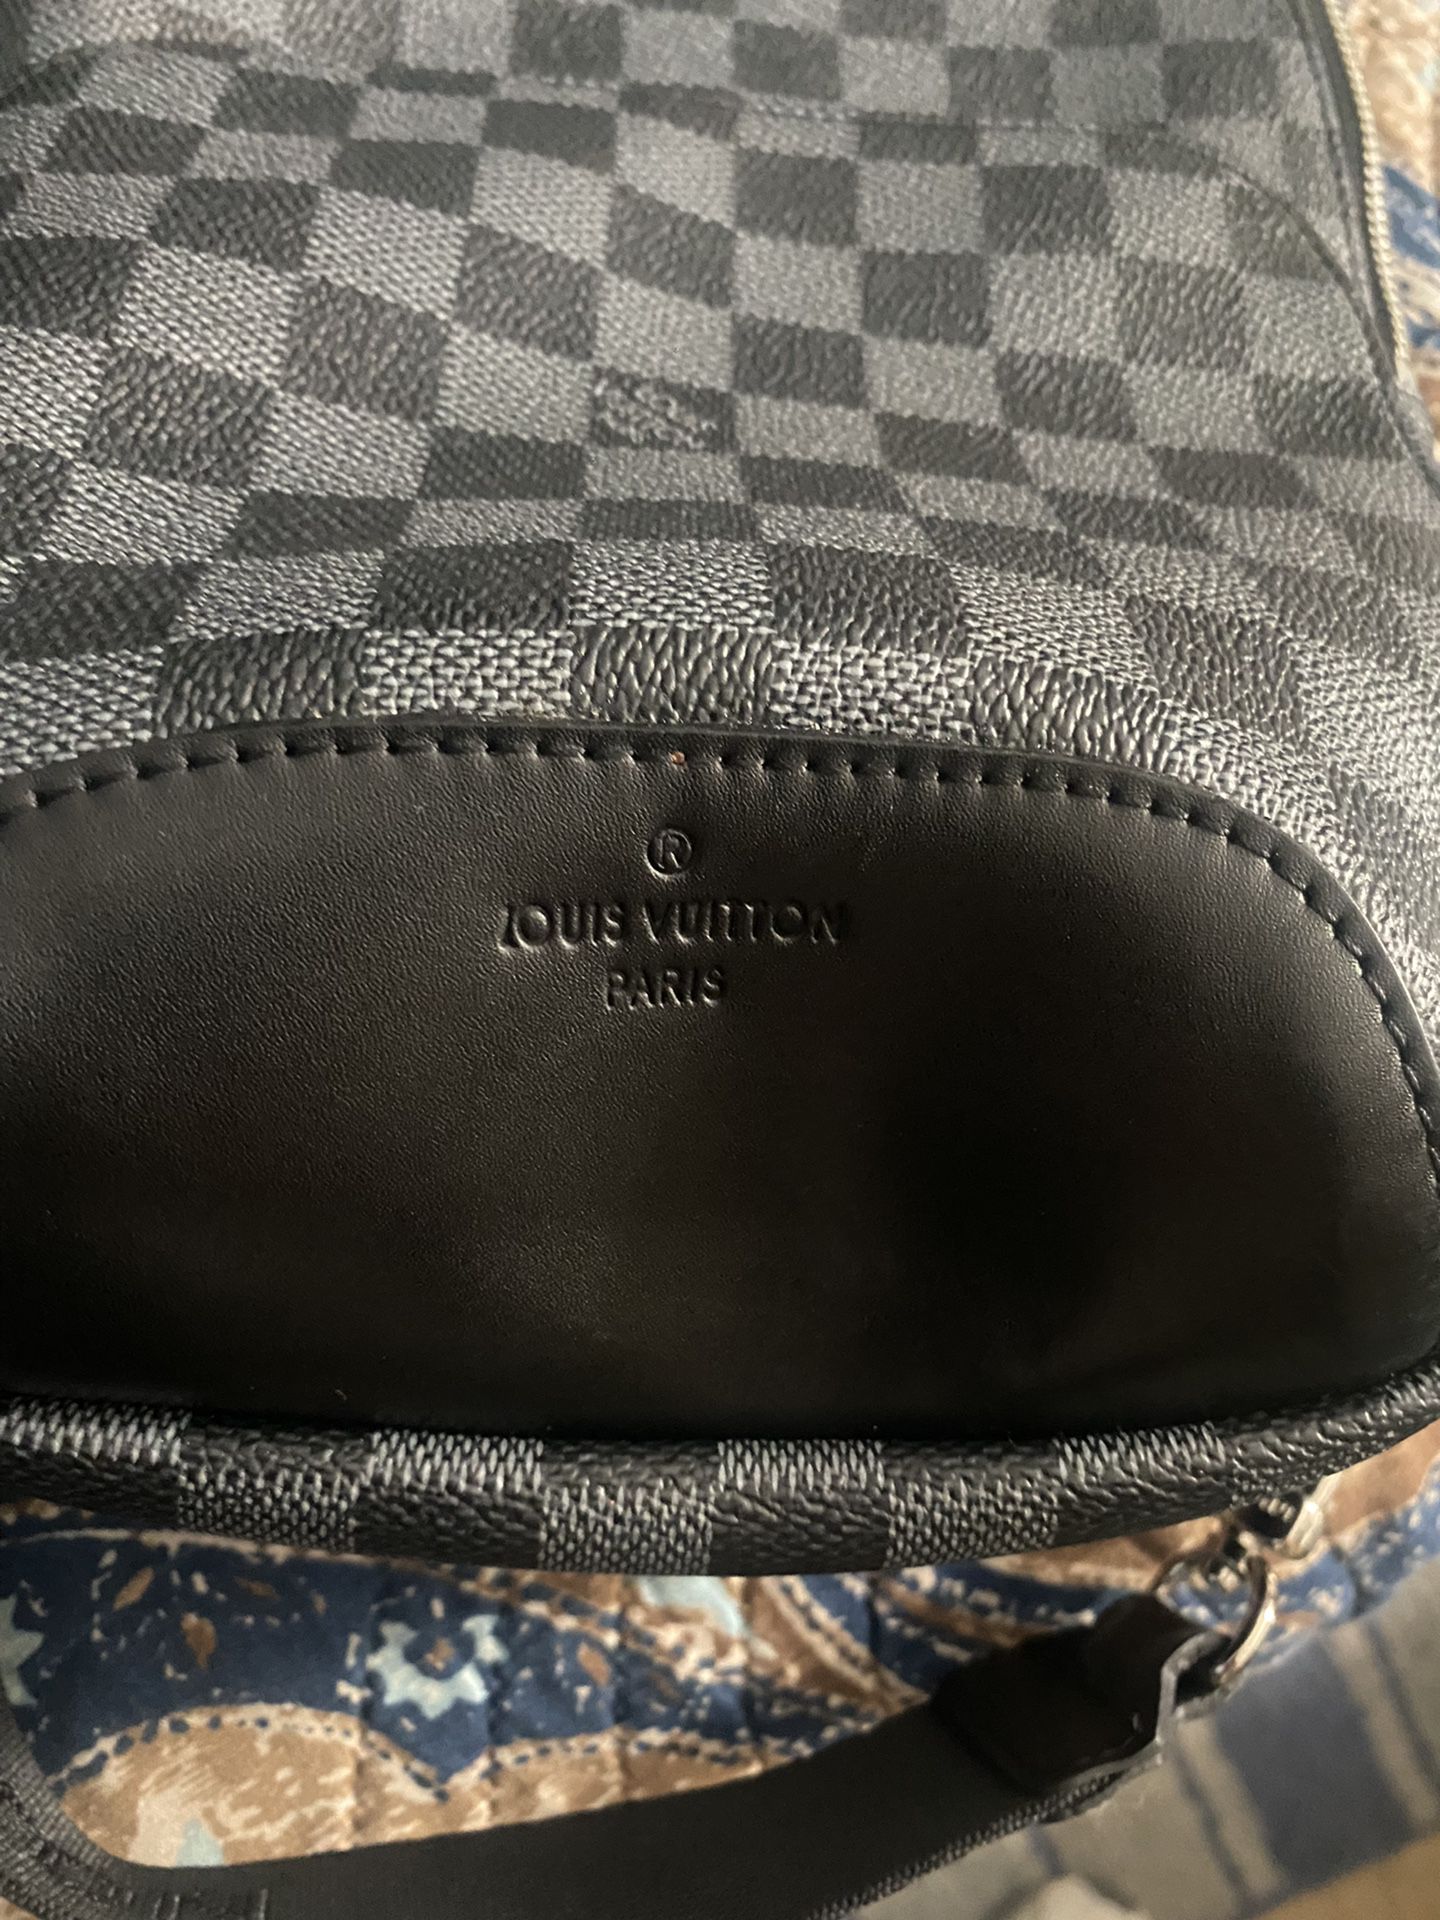 Louis Vuitton Avenue Sling Bag for Sale in Berenda, CA - OfferUp